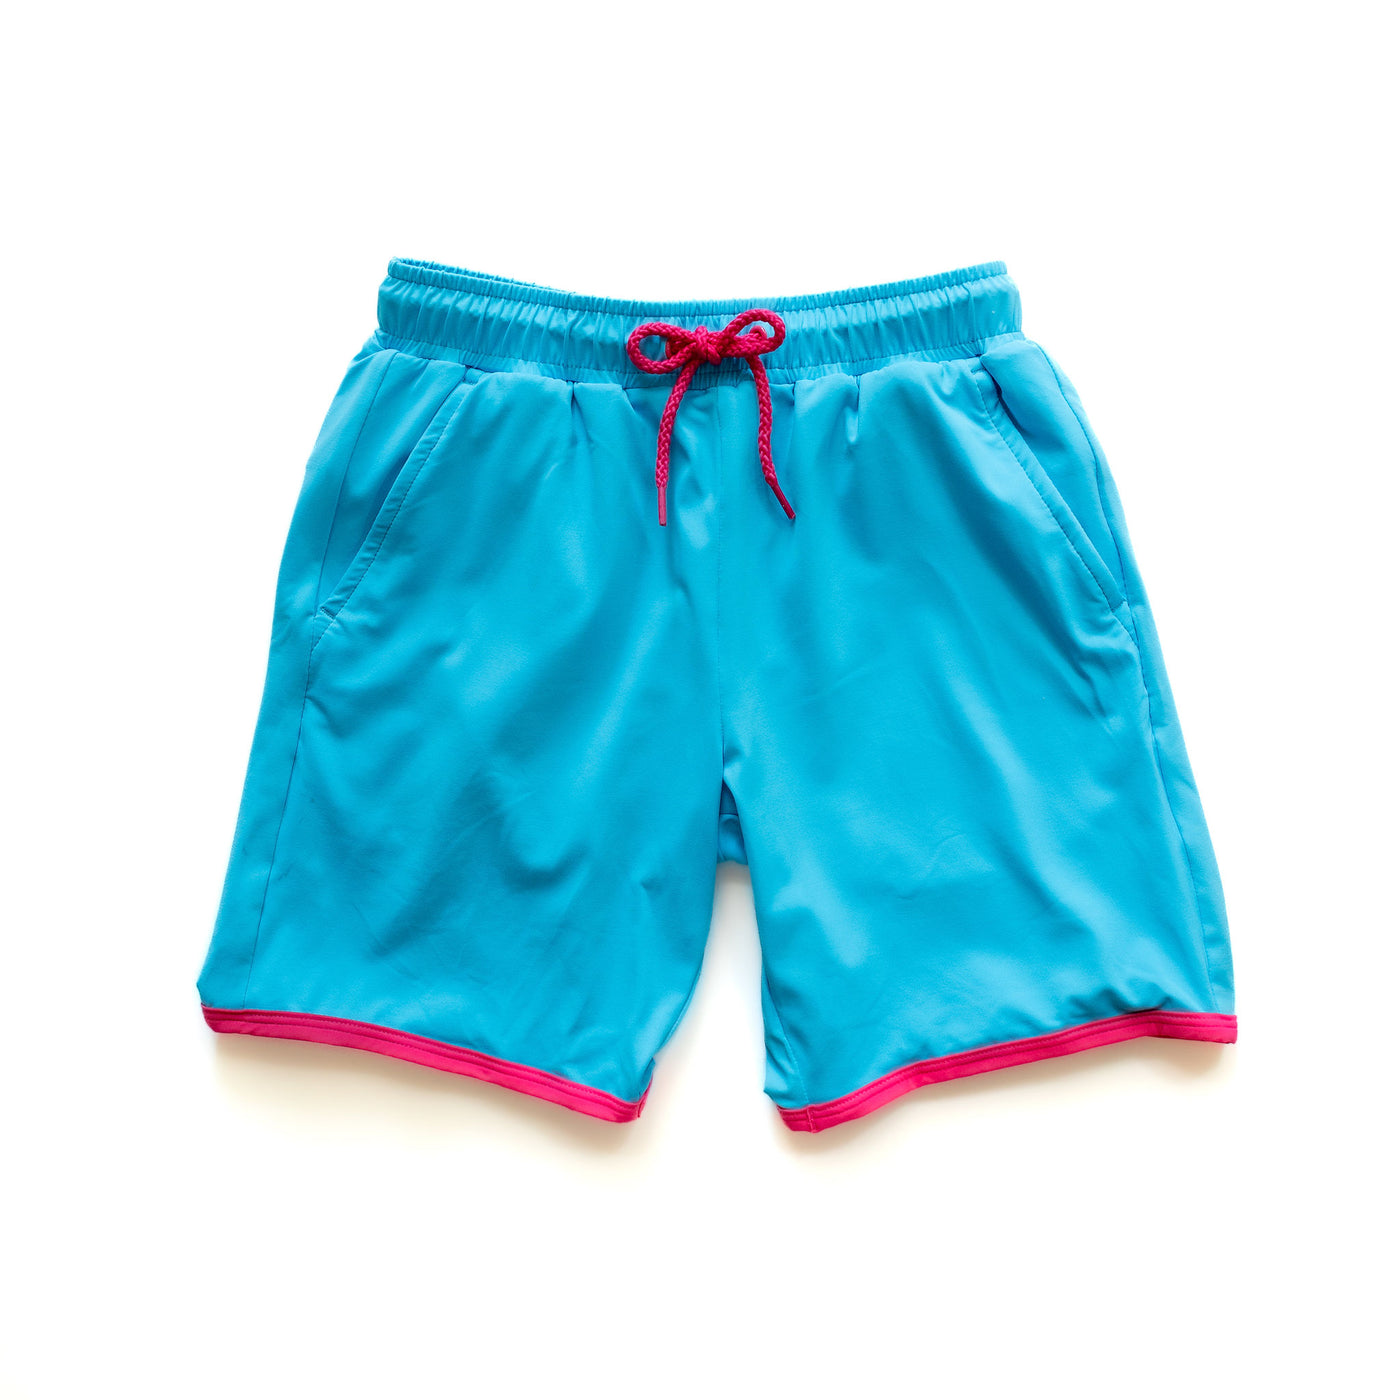 Navalora Boy's Miami Vibes Pink and Blue Swim Shorts